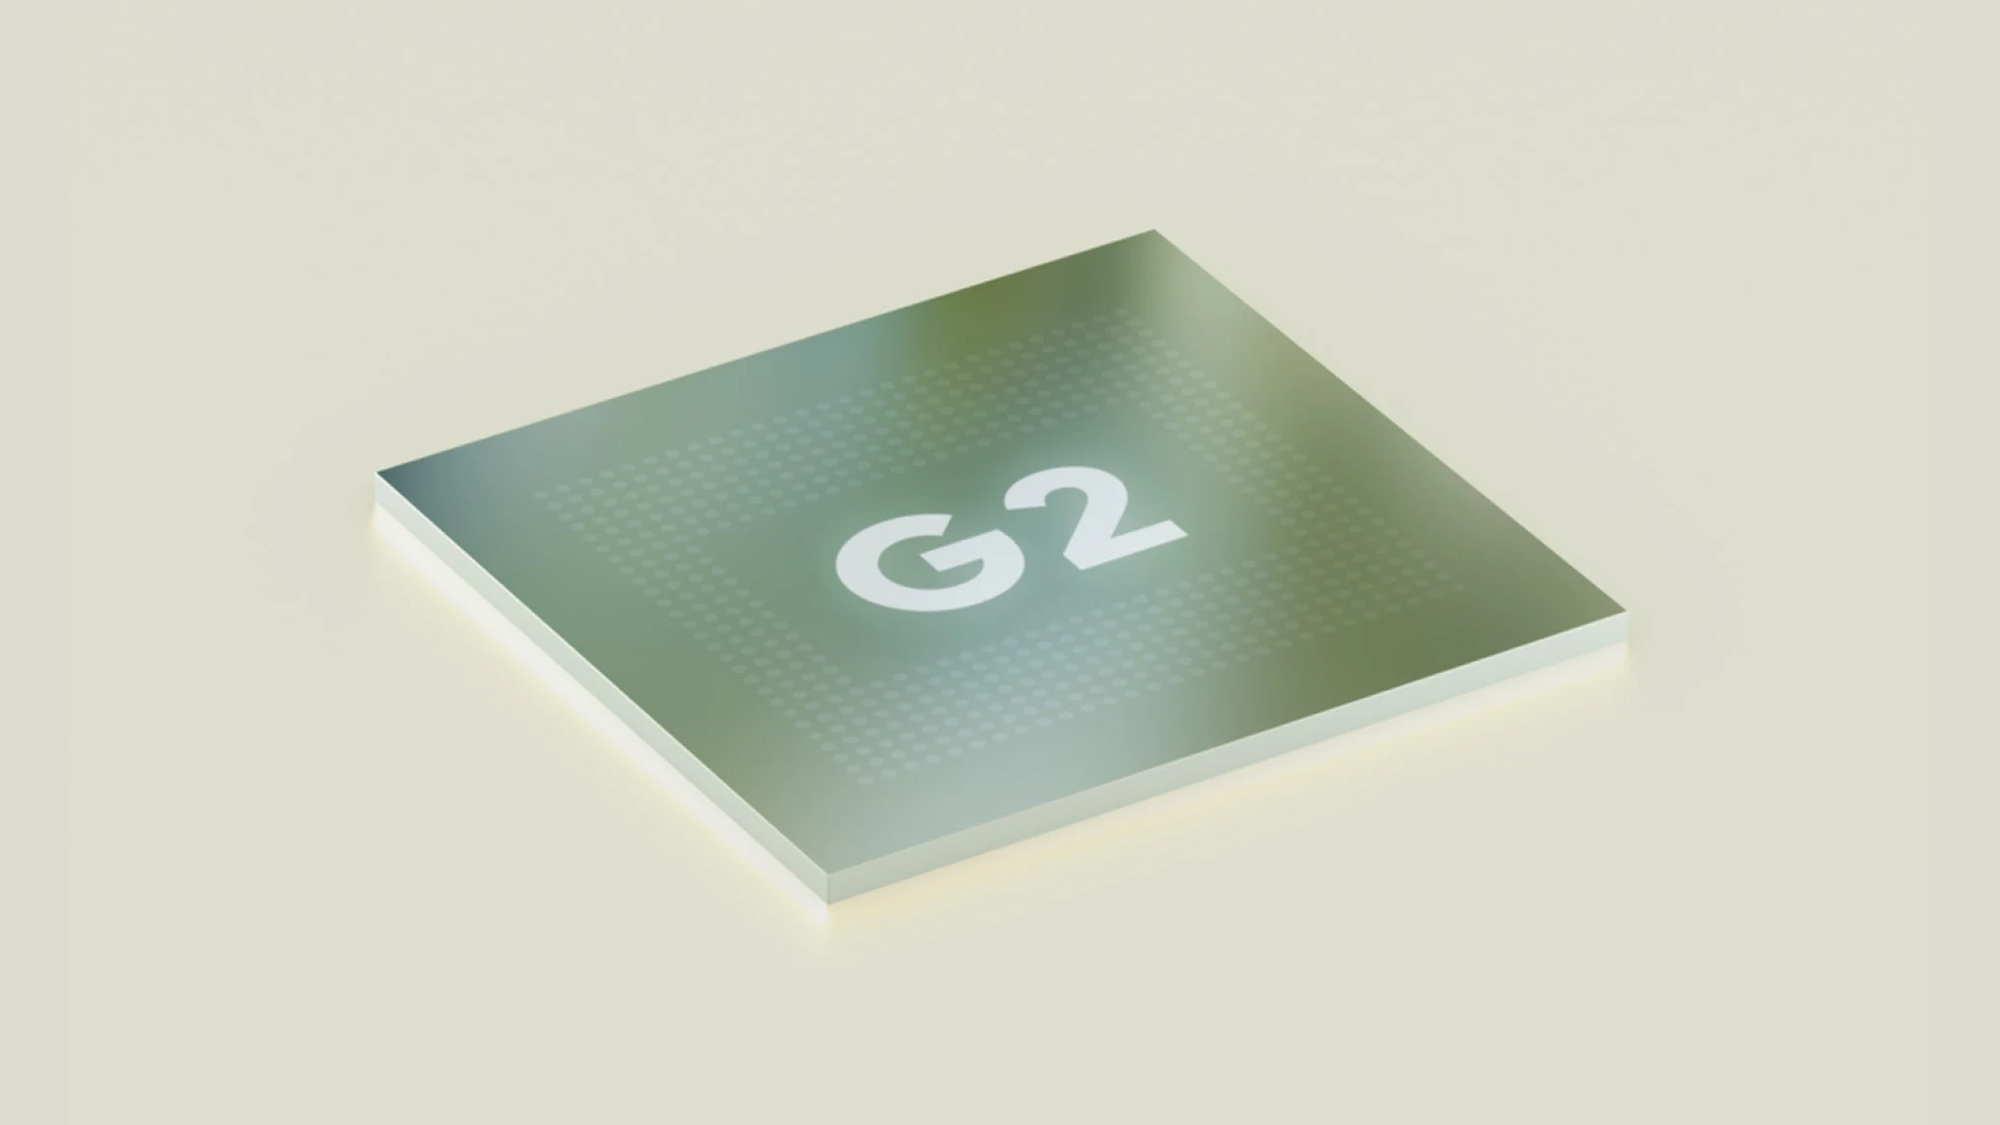 A press render of the Google Tensor G2 chipset